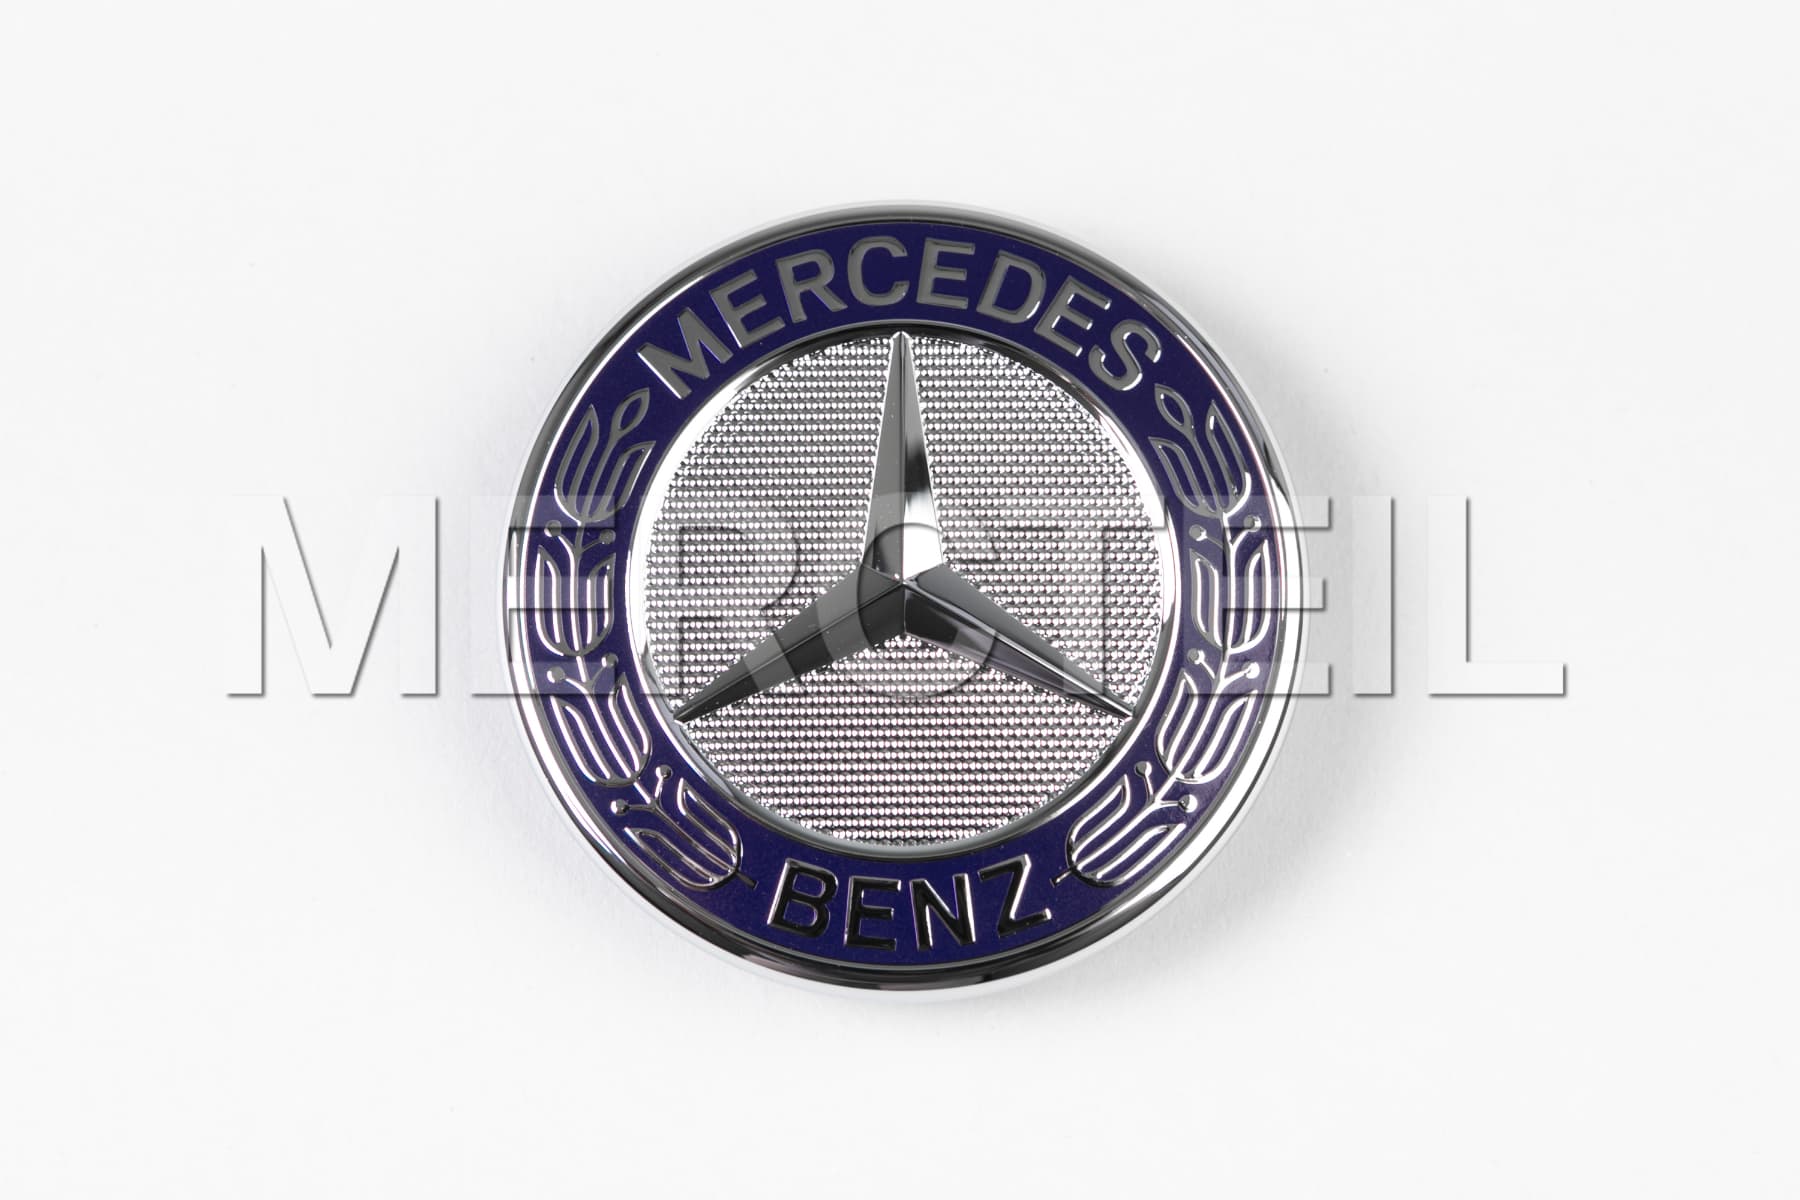 AMG Front Hood Emblem Matte Black Flat Laurel Wreath Badge Mercedes Be